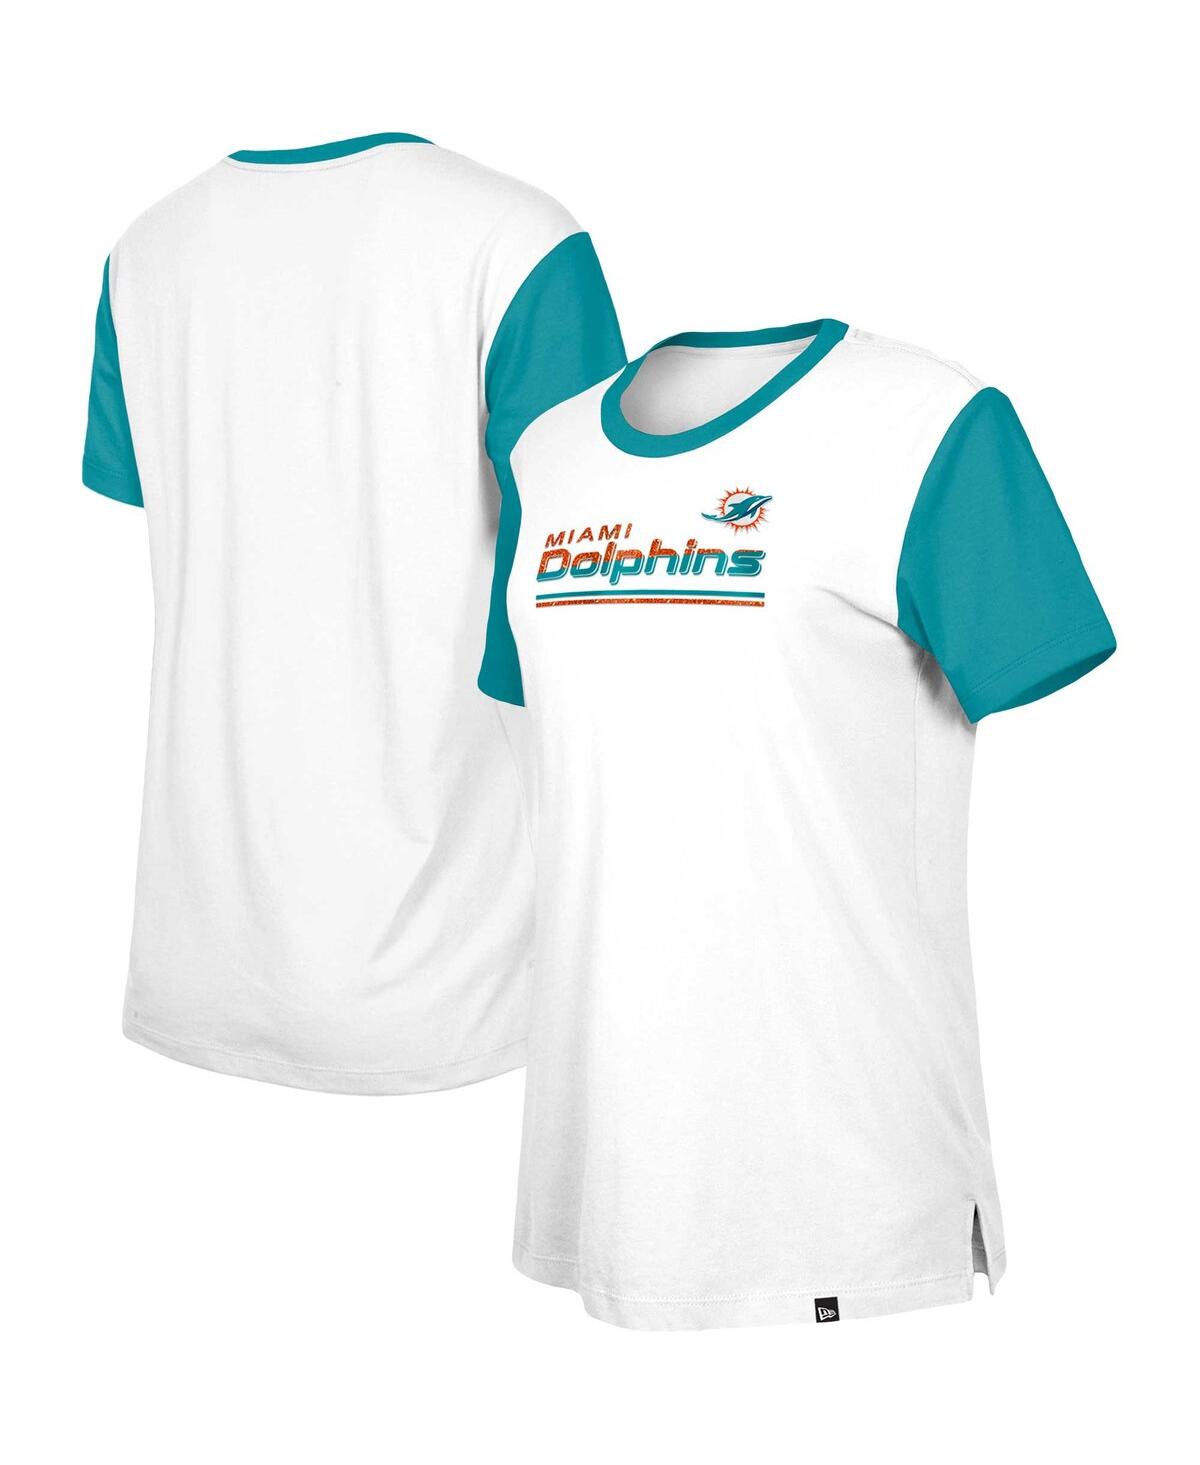 Women's New Era White, Aqua Miami Dolphins Third Down Colorblock T-shirt - White, Aqua